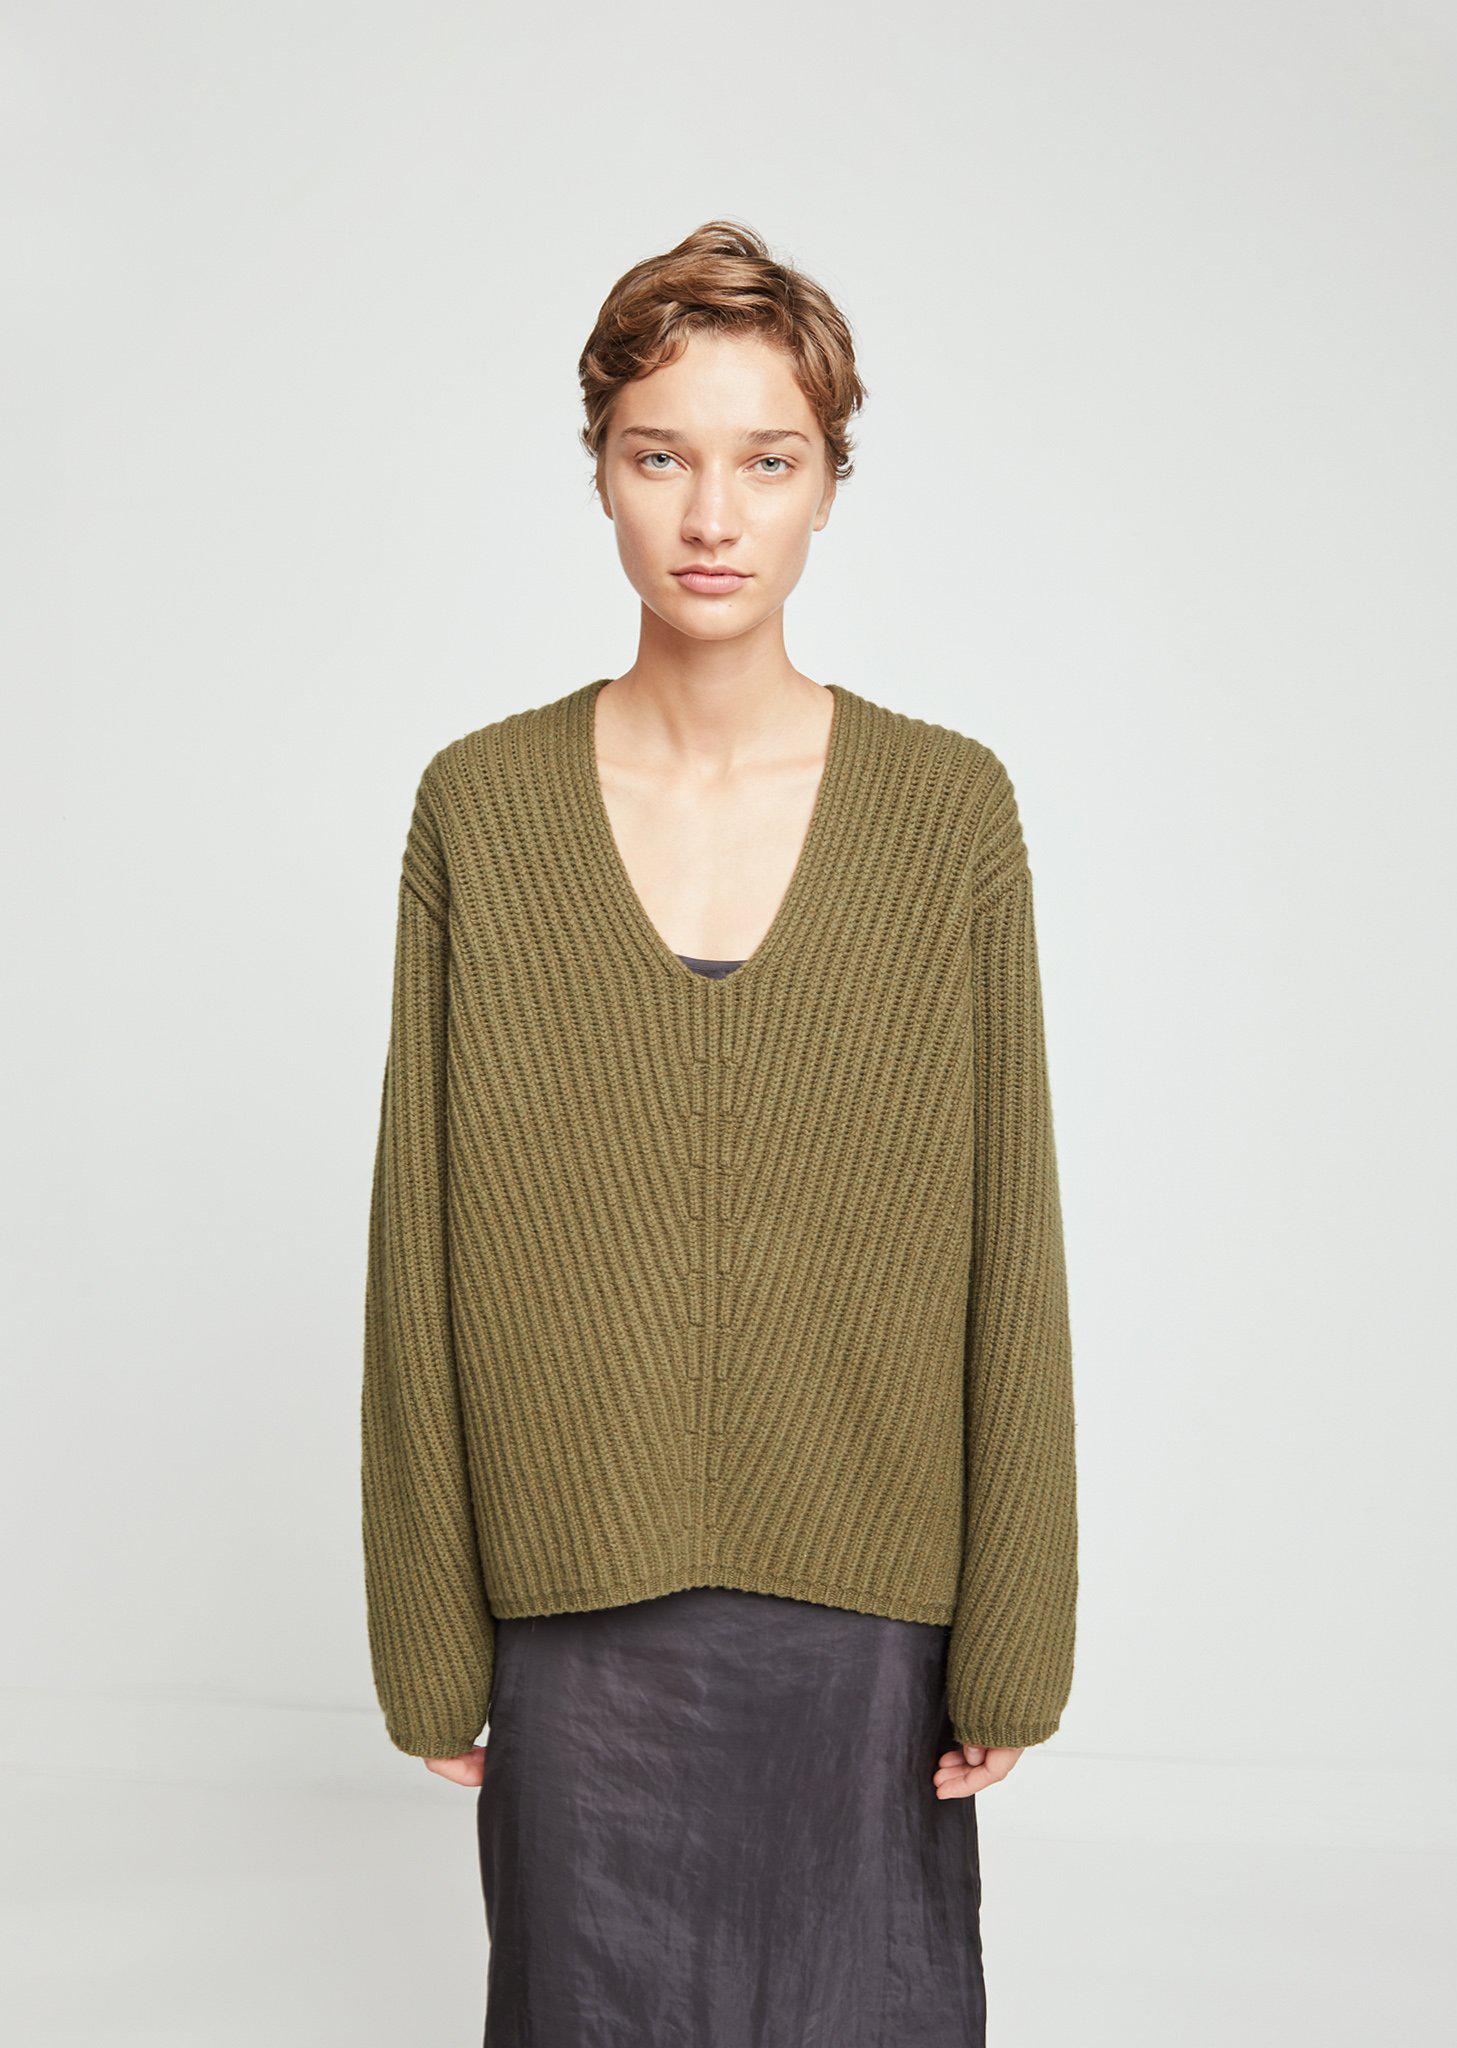 Acne Studios Deborah Wool Sweater in Khaki Green (Green) | Lyst